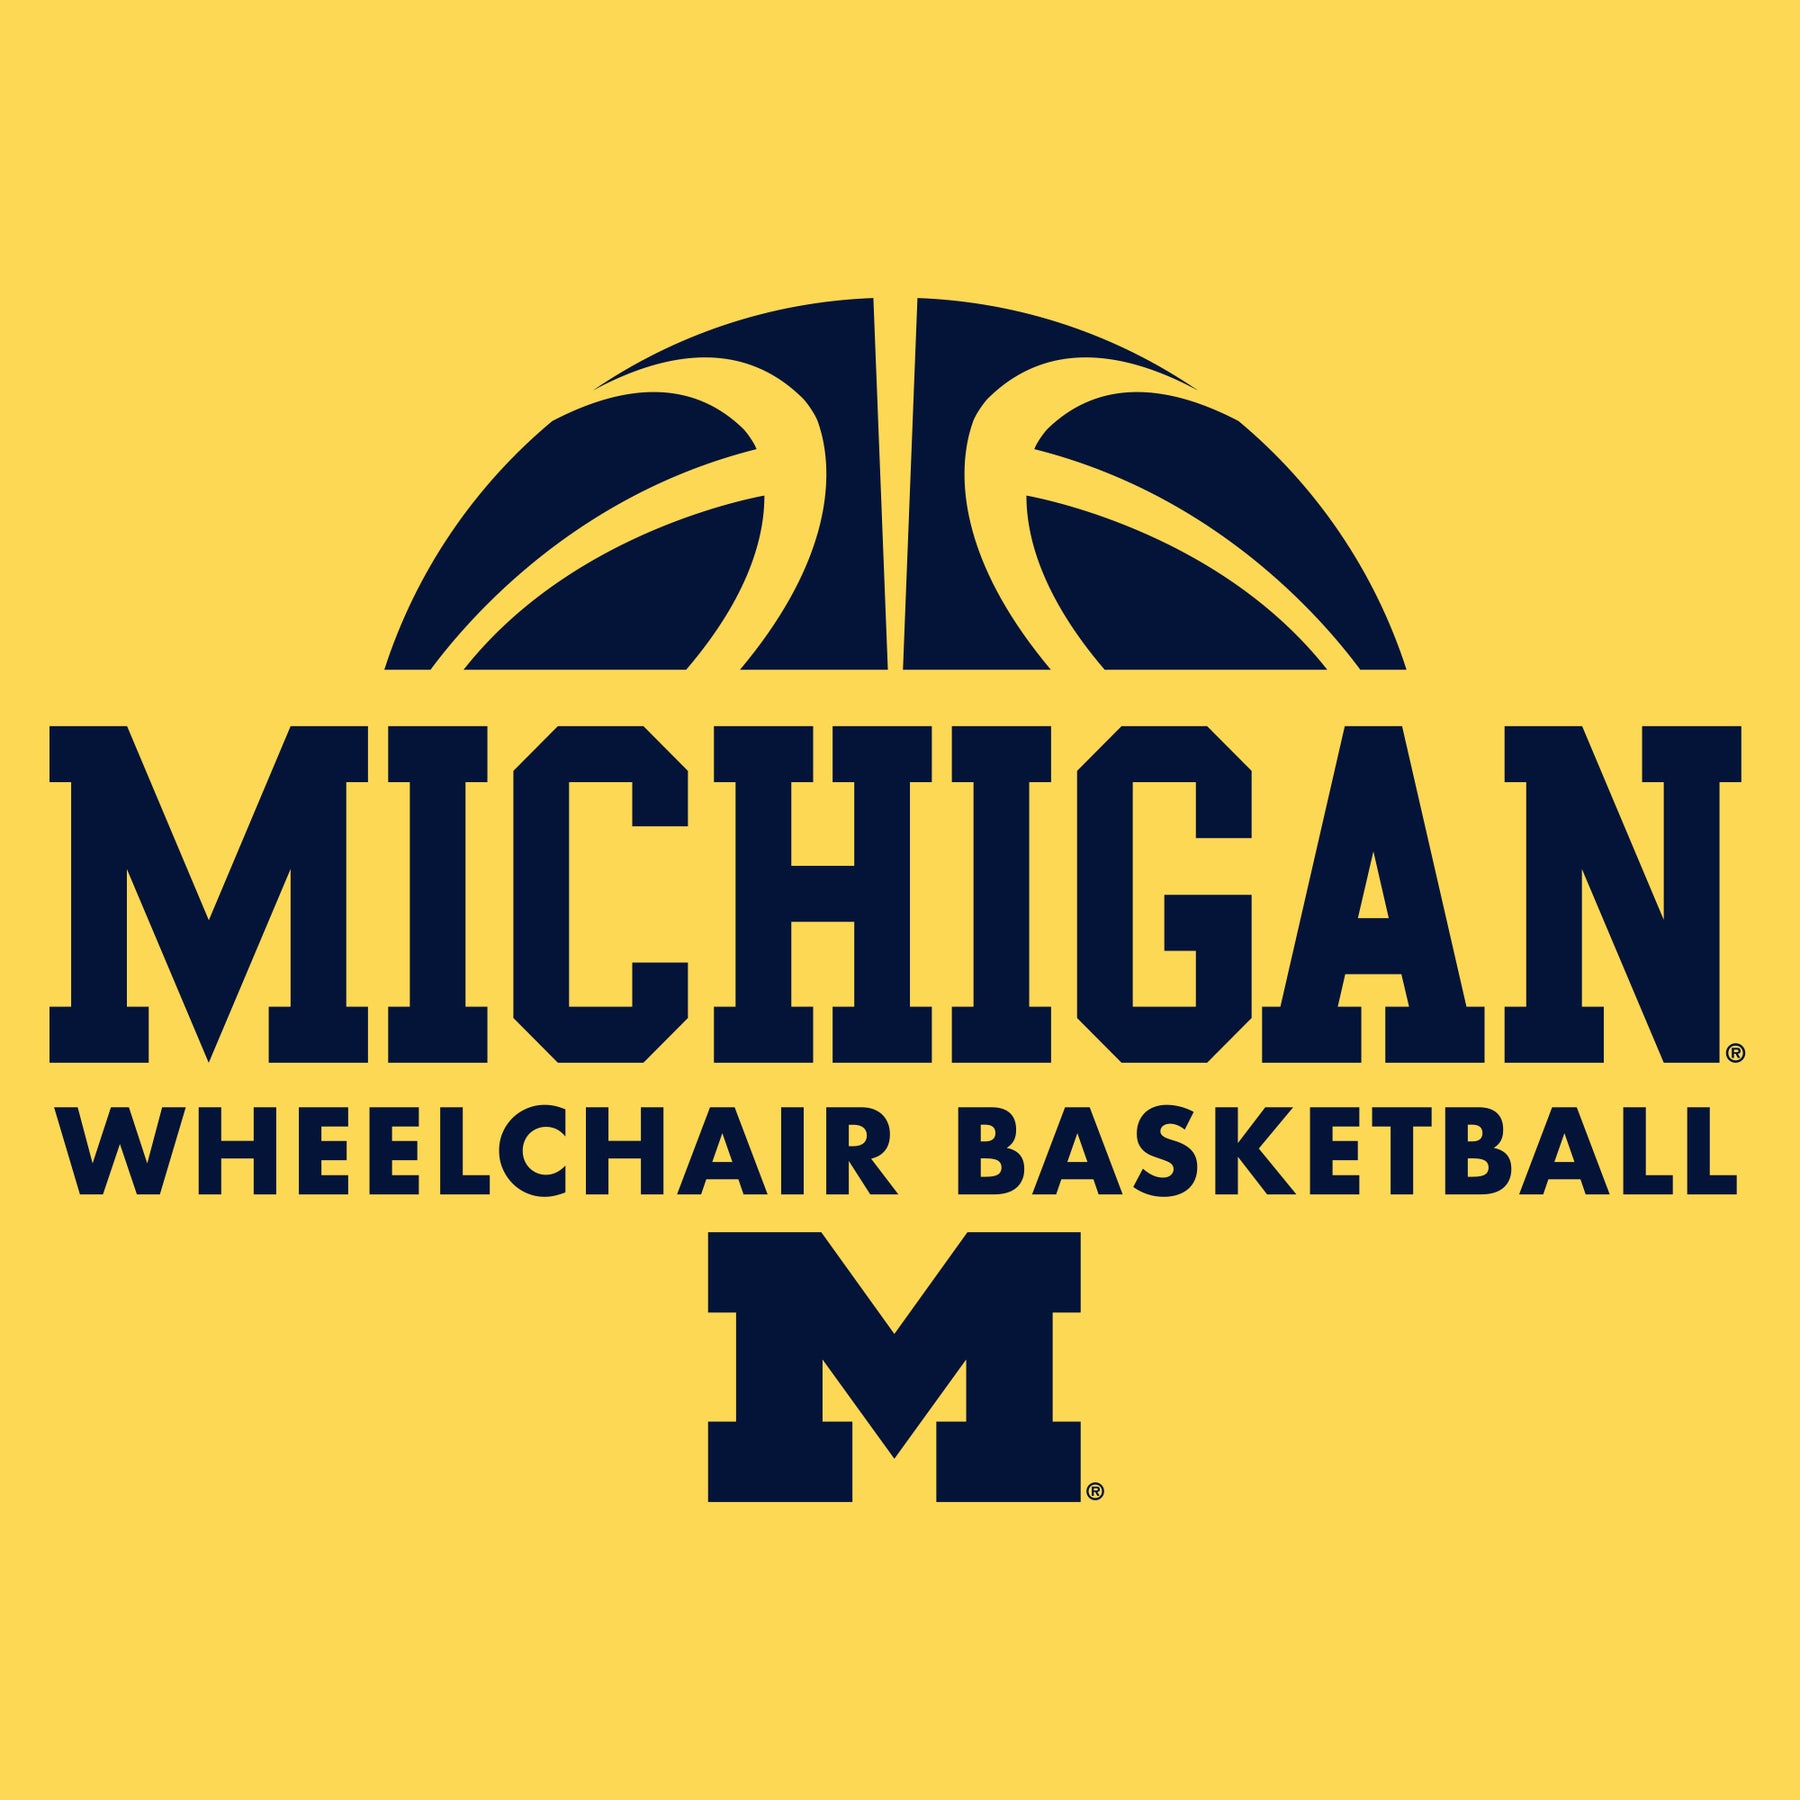 Arch Logo Wheelchair Basketball University of Michigan Basic